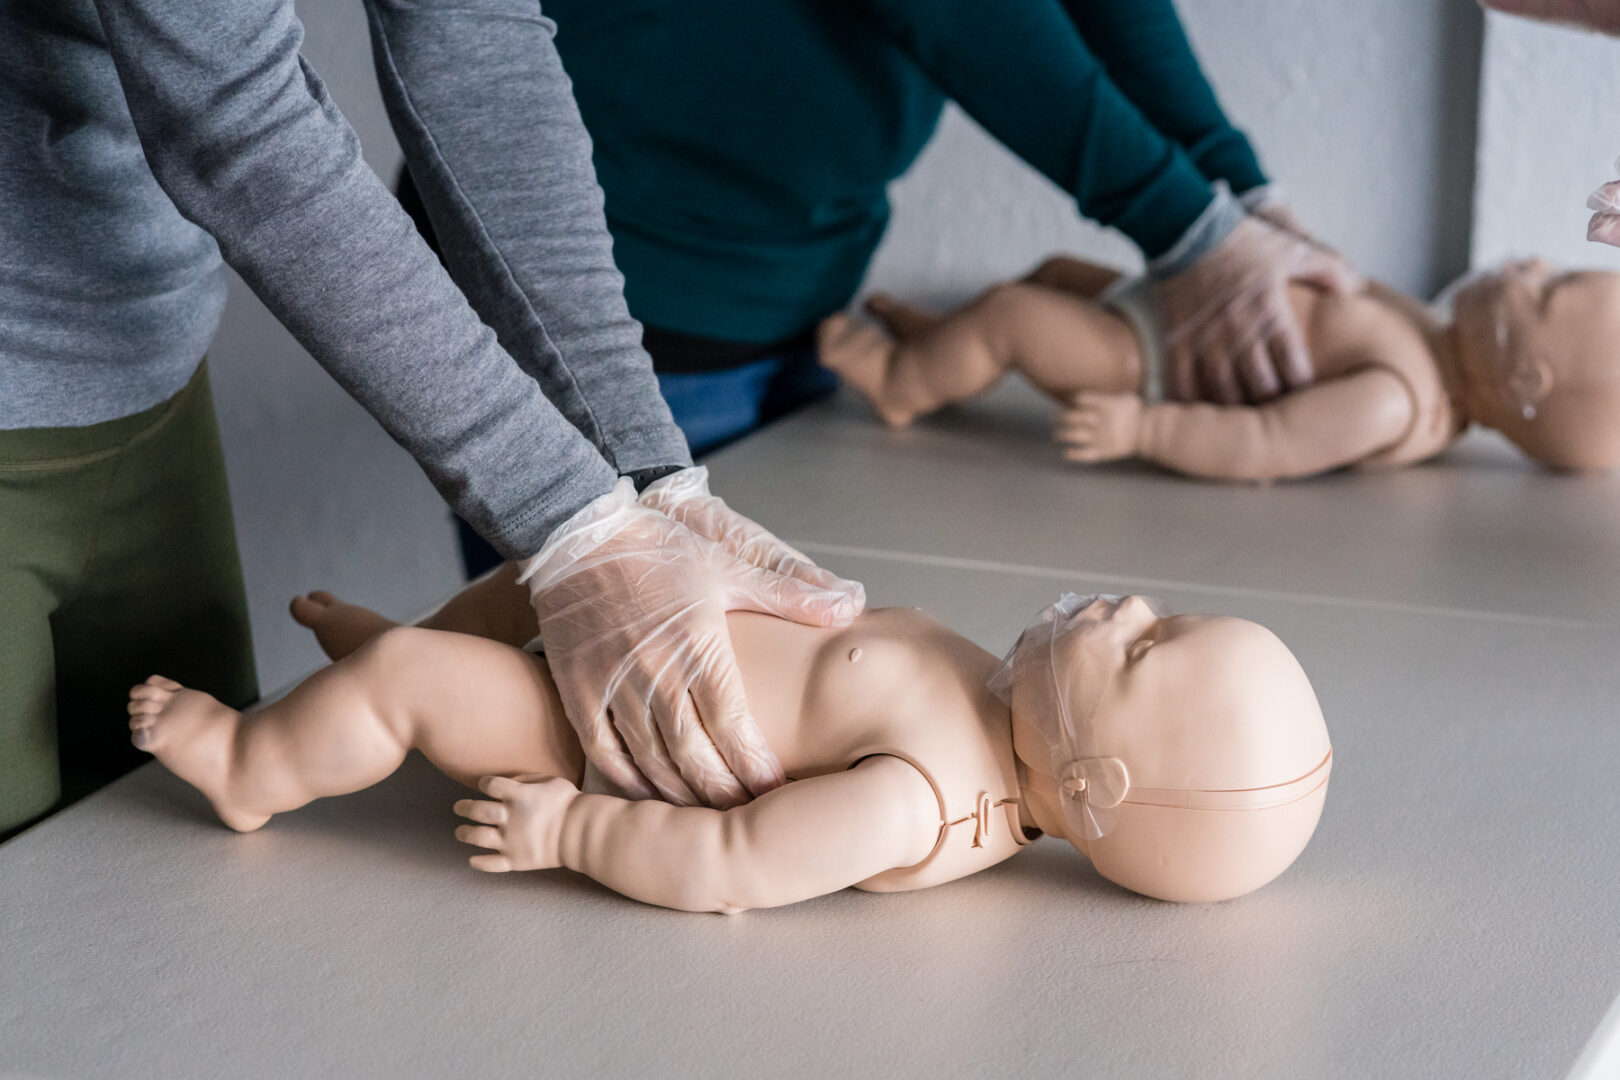 JBLM Adult &and Pediatric CPR training in progress